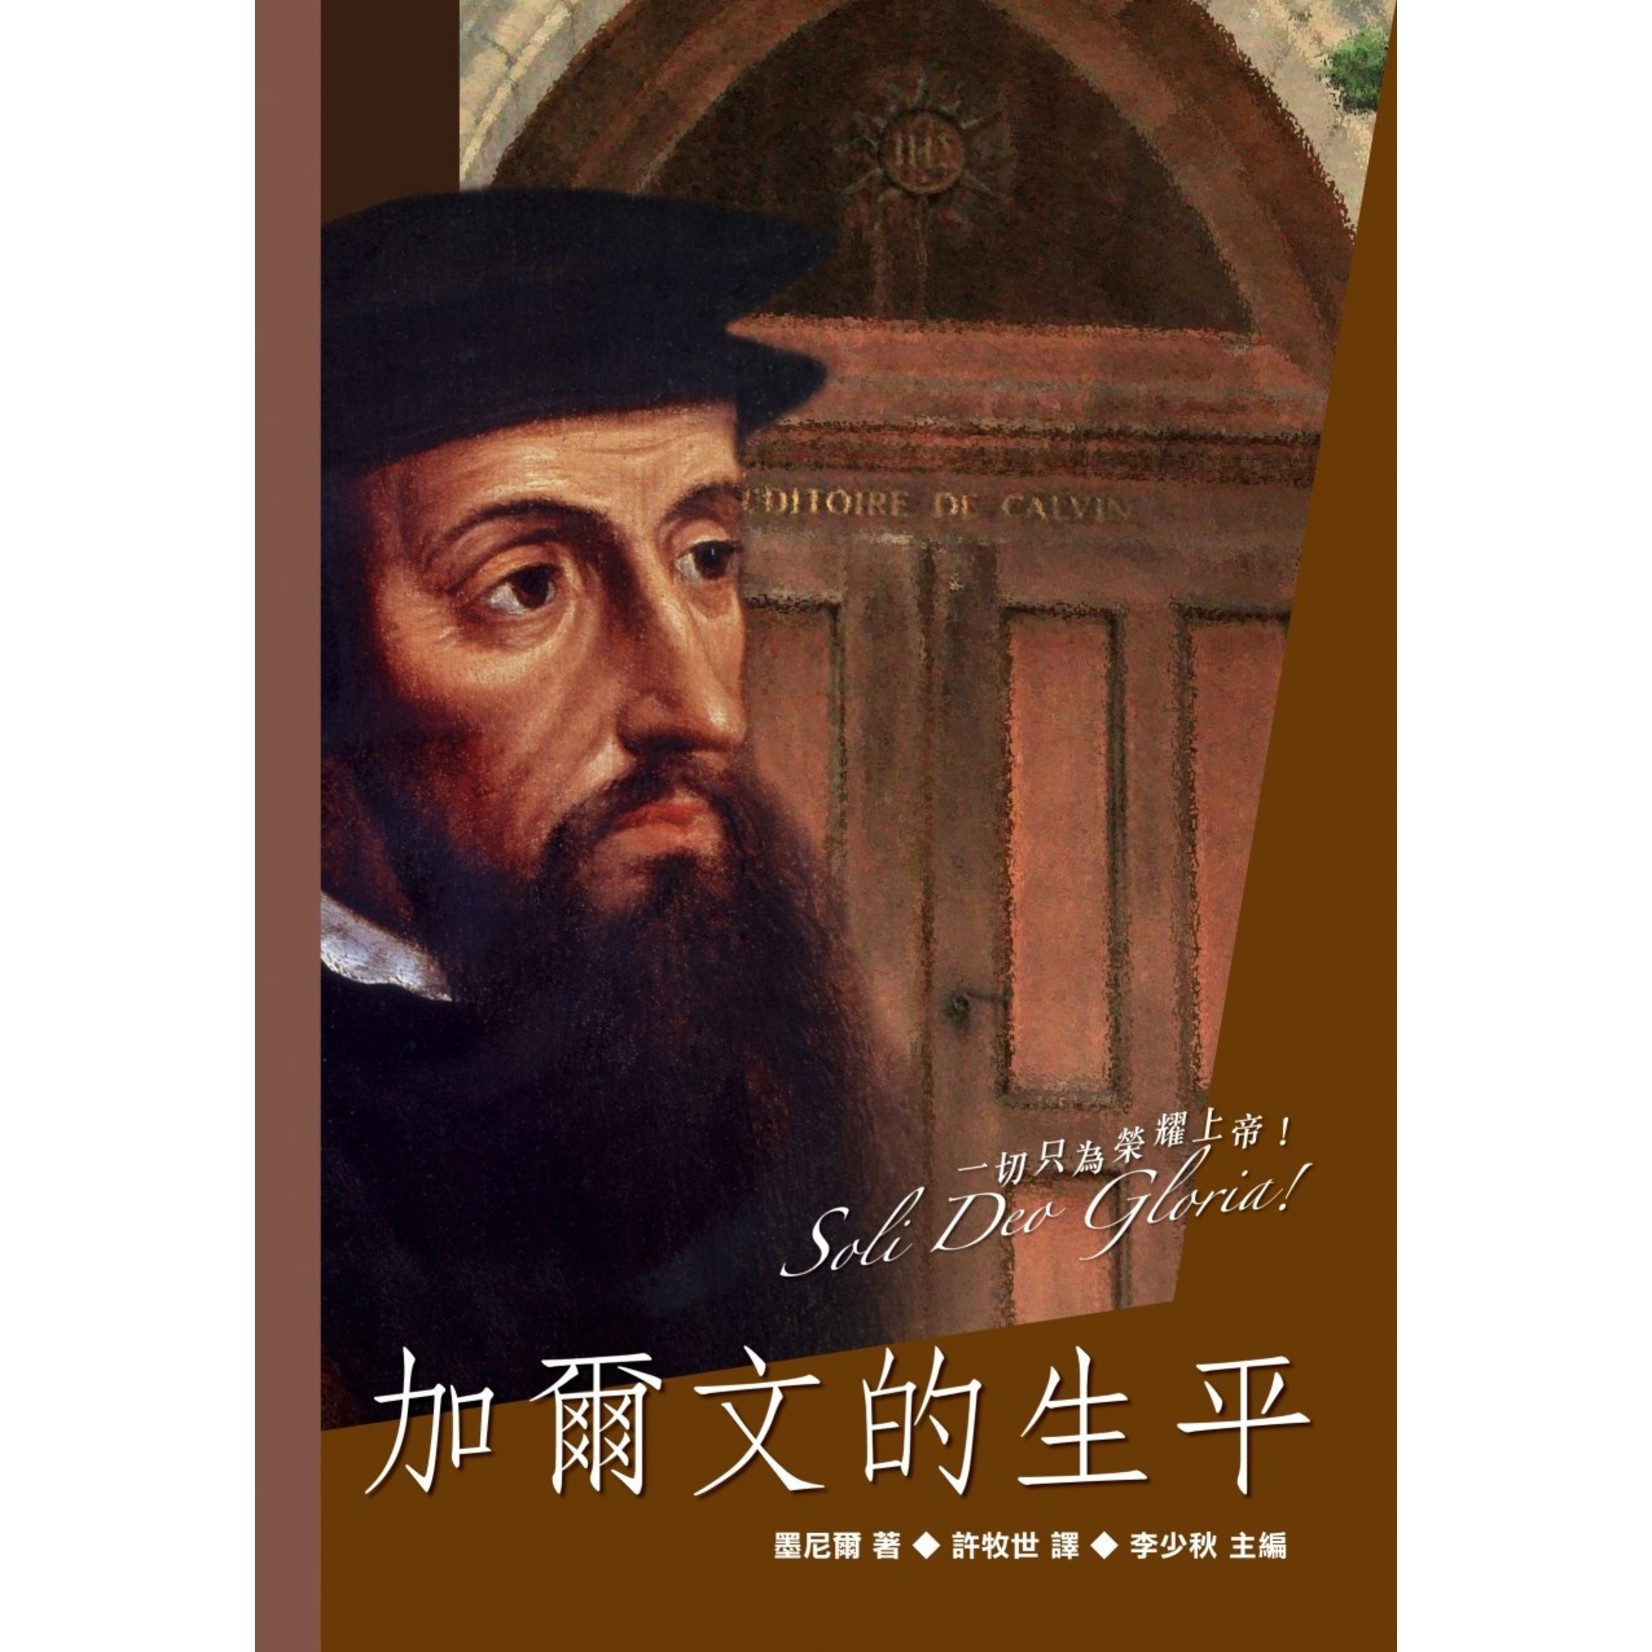 基督教文藝(香港) Chinese Christian Literature Council 加爾文的生平 Life and Teaching Of John Calvin